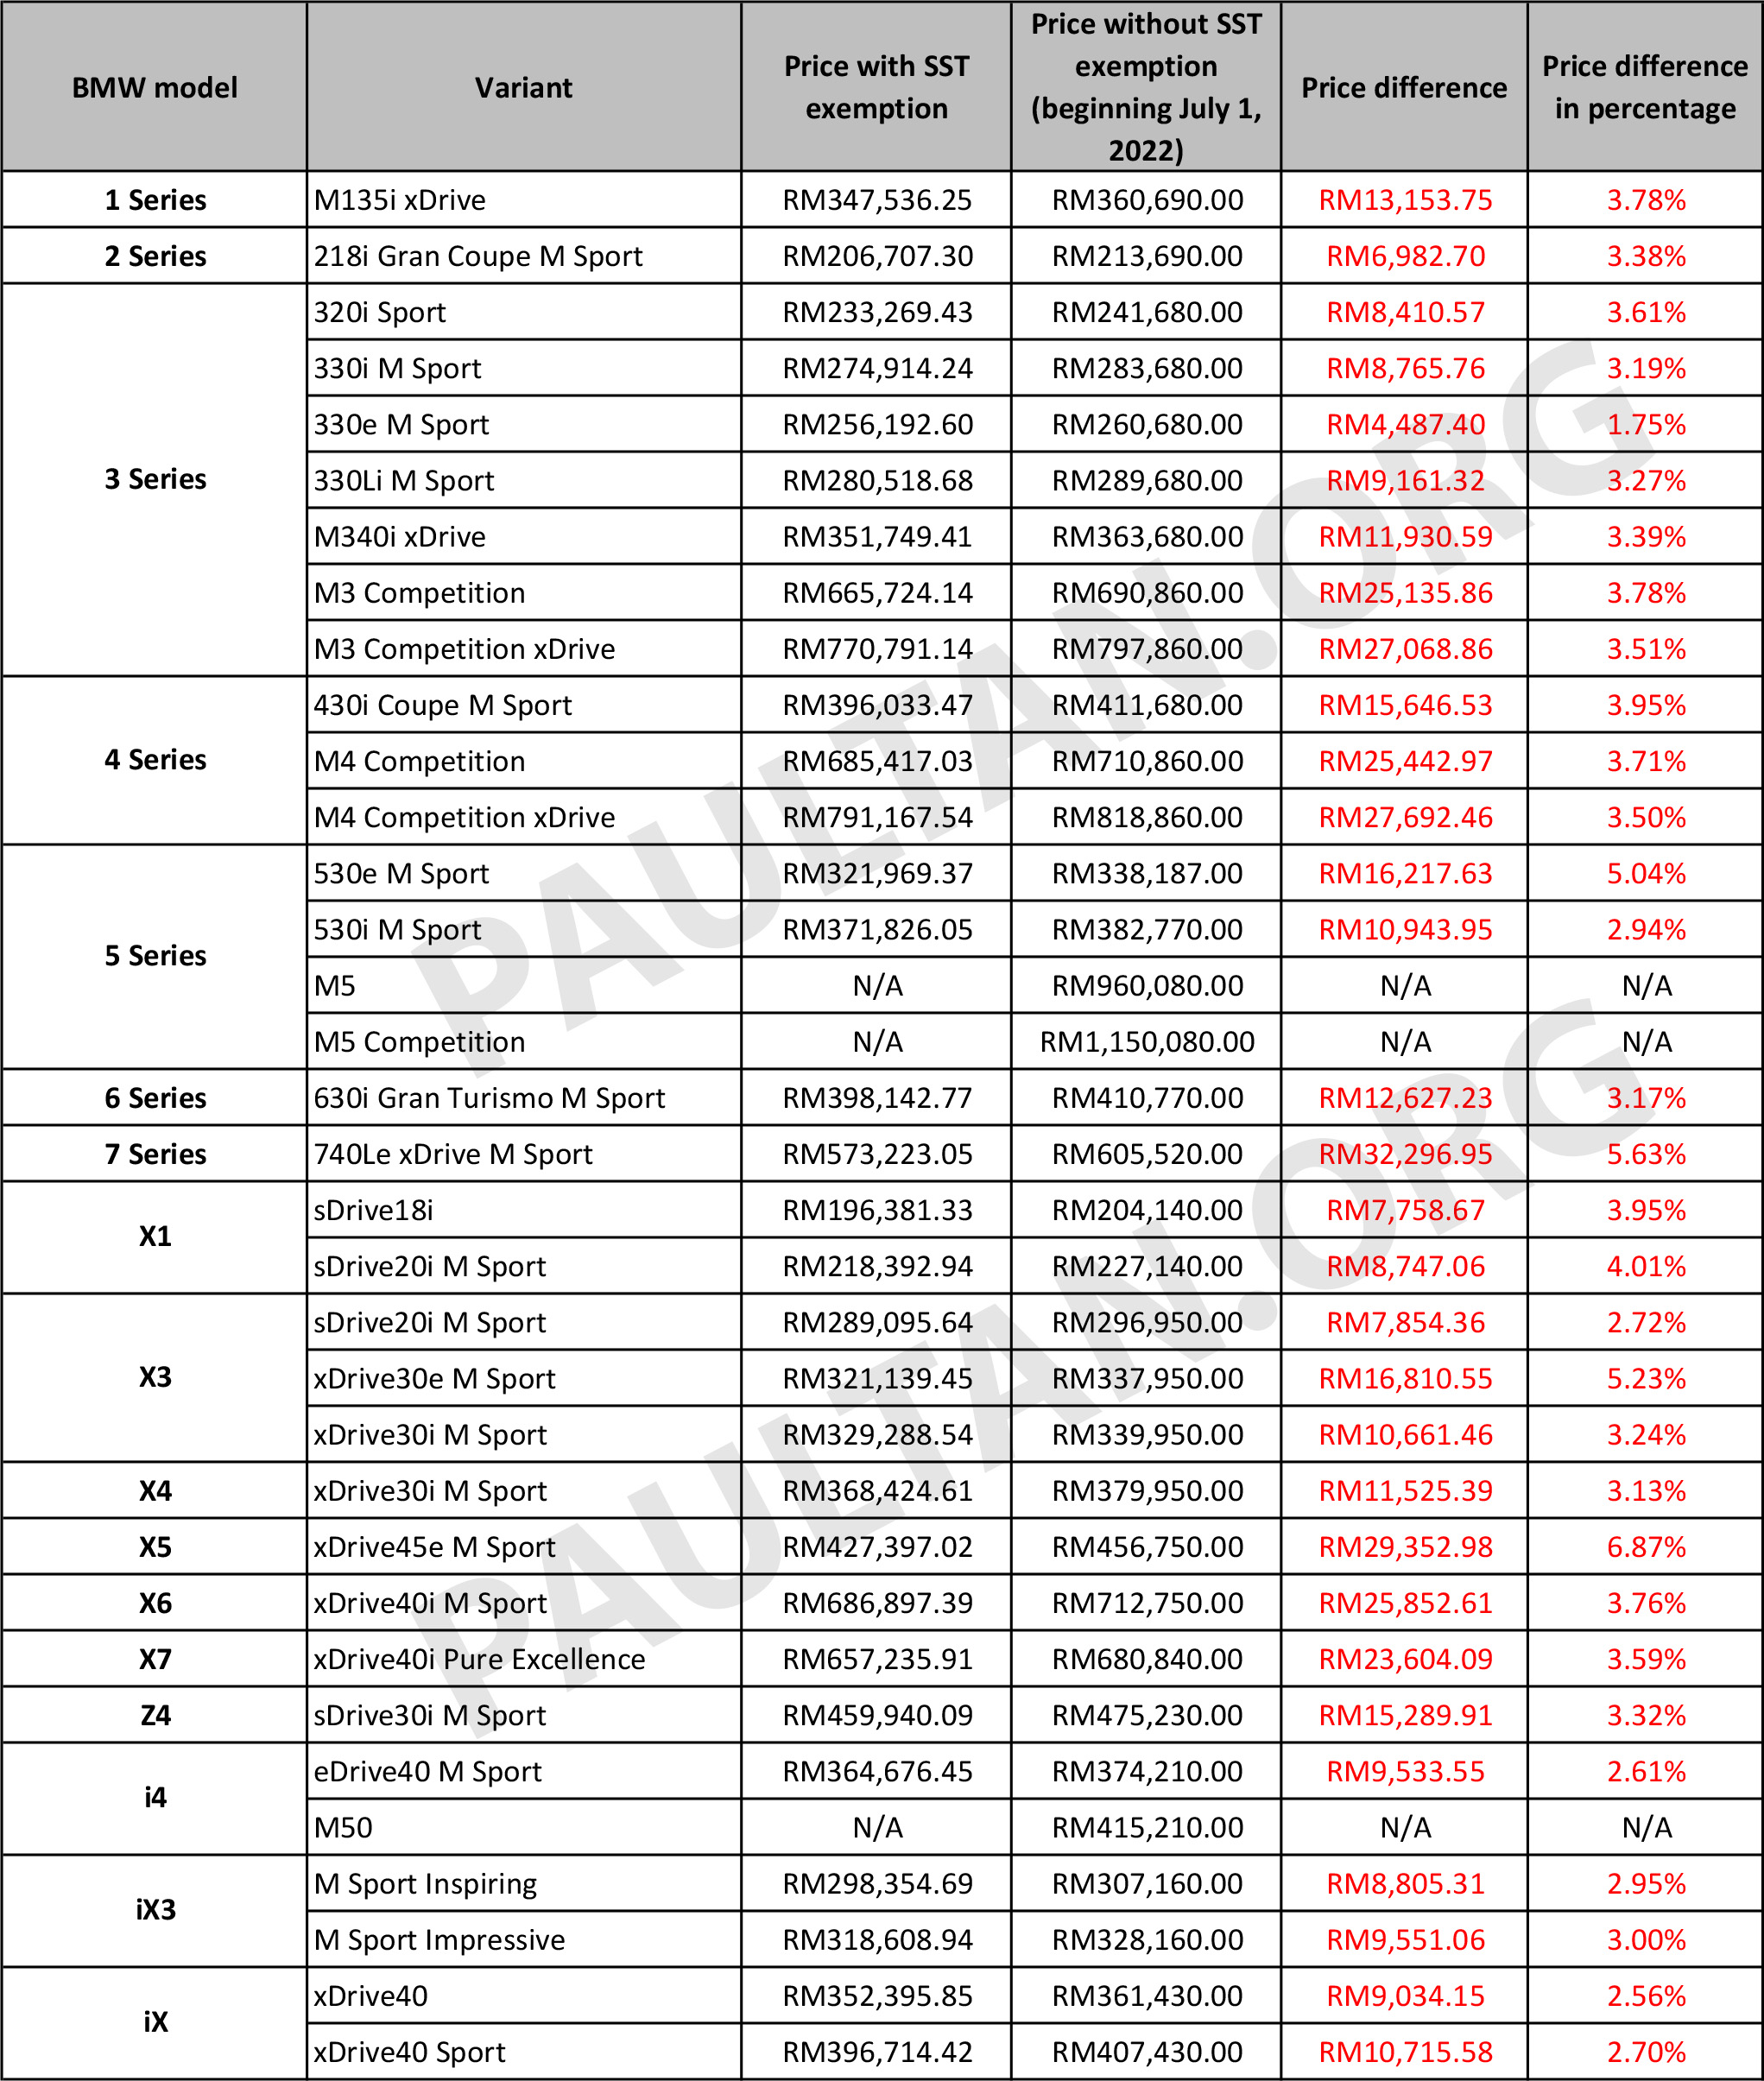 2022 SST-inclusive price list-BMW.xlsx - Paul Tan's Automotive News